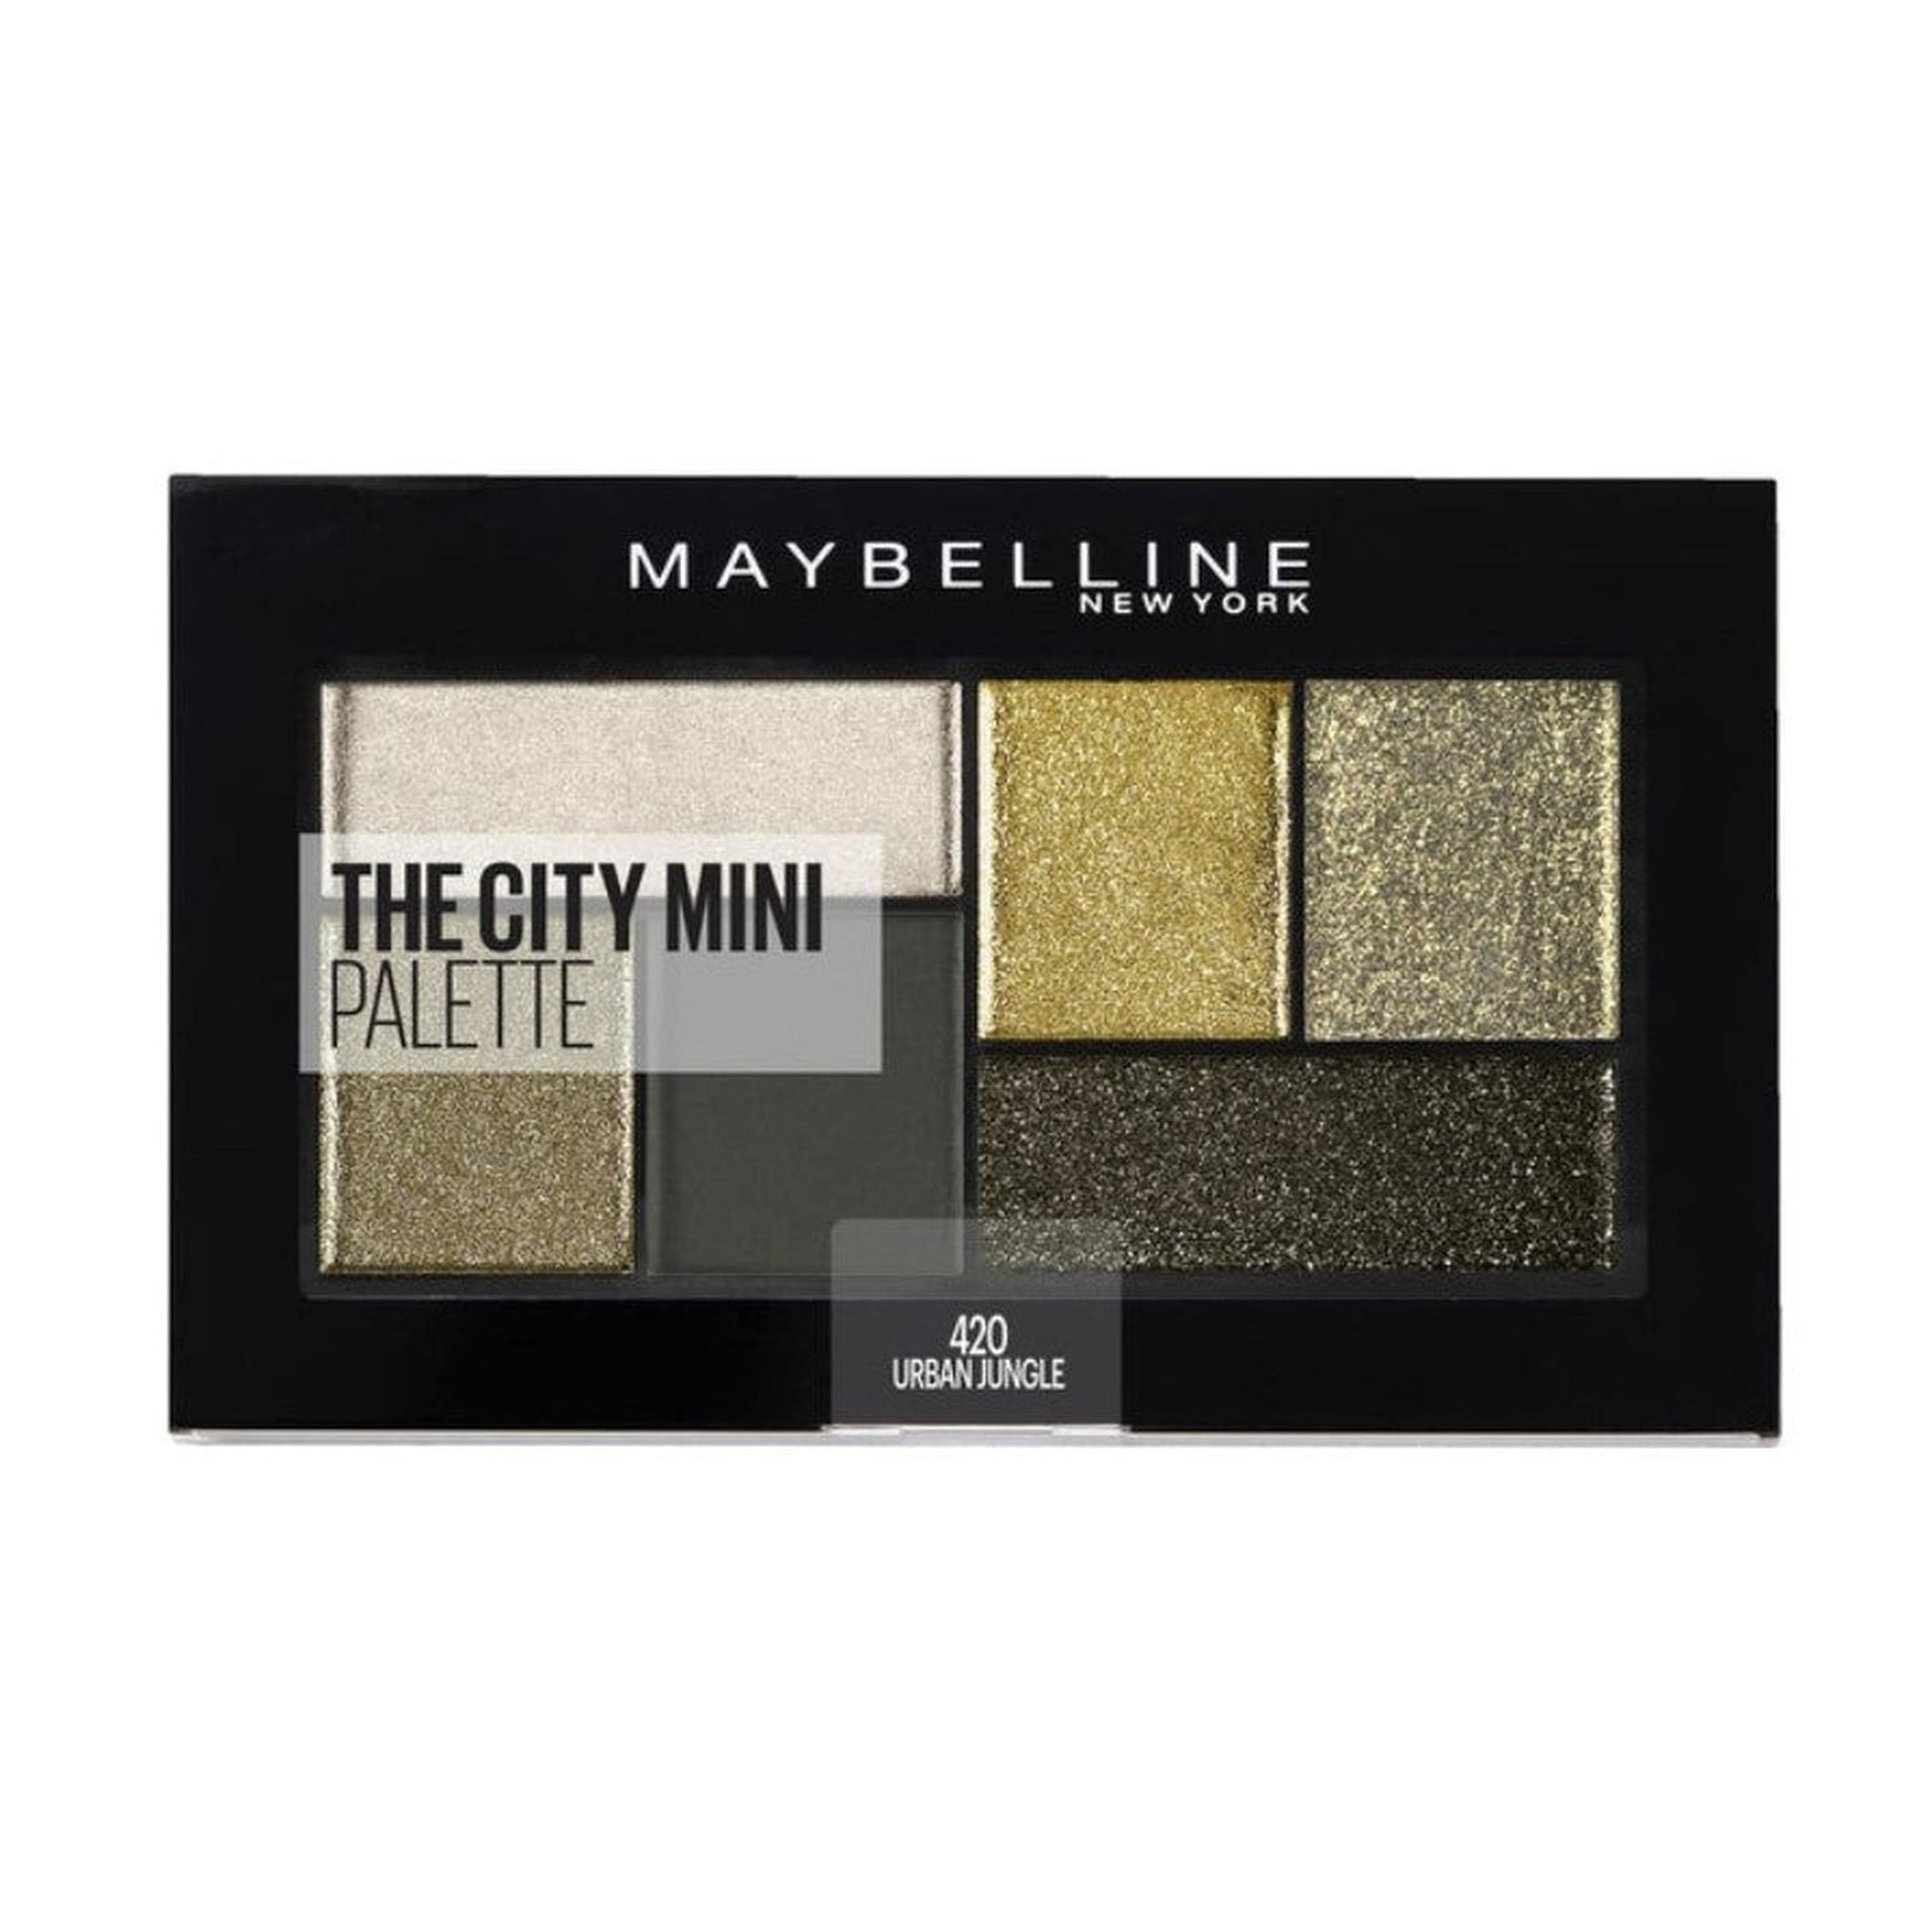 Maybelline The City Mini Eyeshadow Palette Compact 420 Urban Jungle-Maybelline-BeautyNmakeup.co.uk